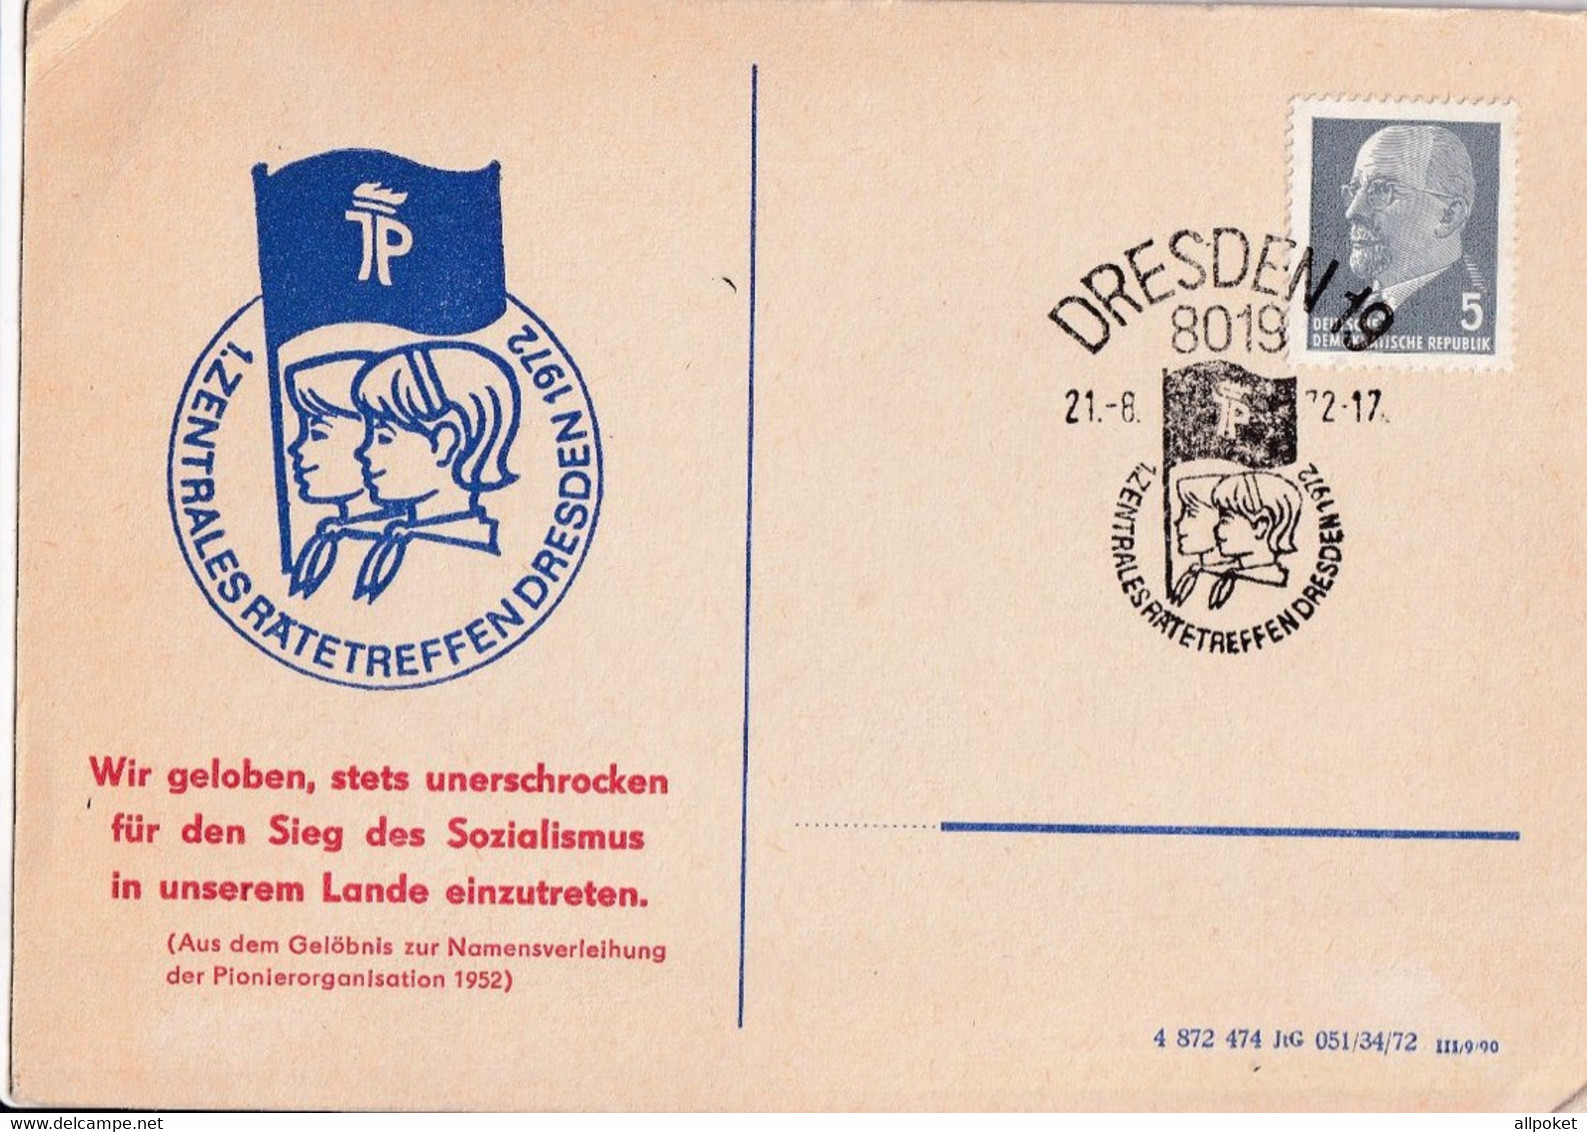 A14402 - ZENTRALES RATTETREFFEND DRESDEN IP SCOUTS DRESDEN GERMANY 1972 - Privatpostkarten - Gebraucht